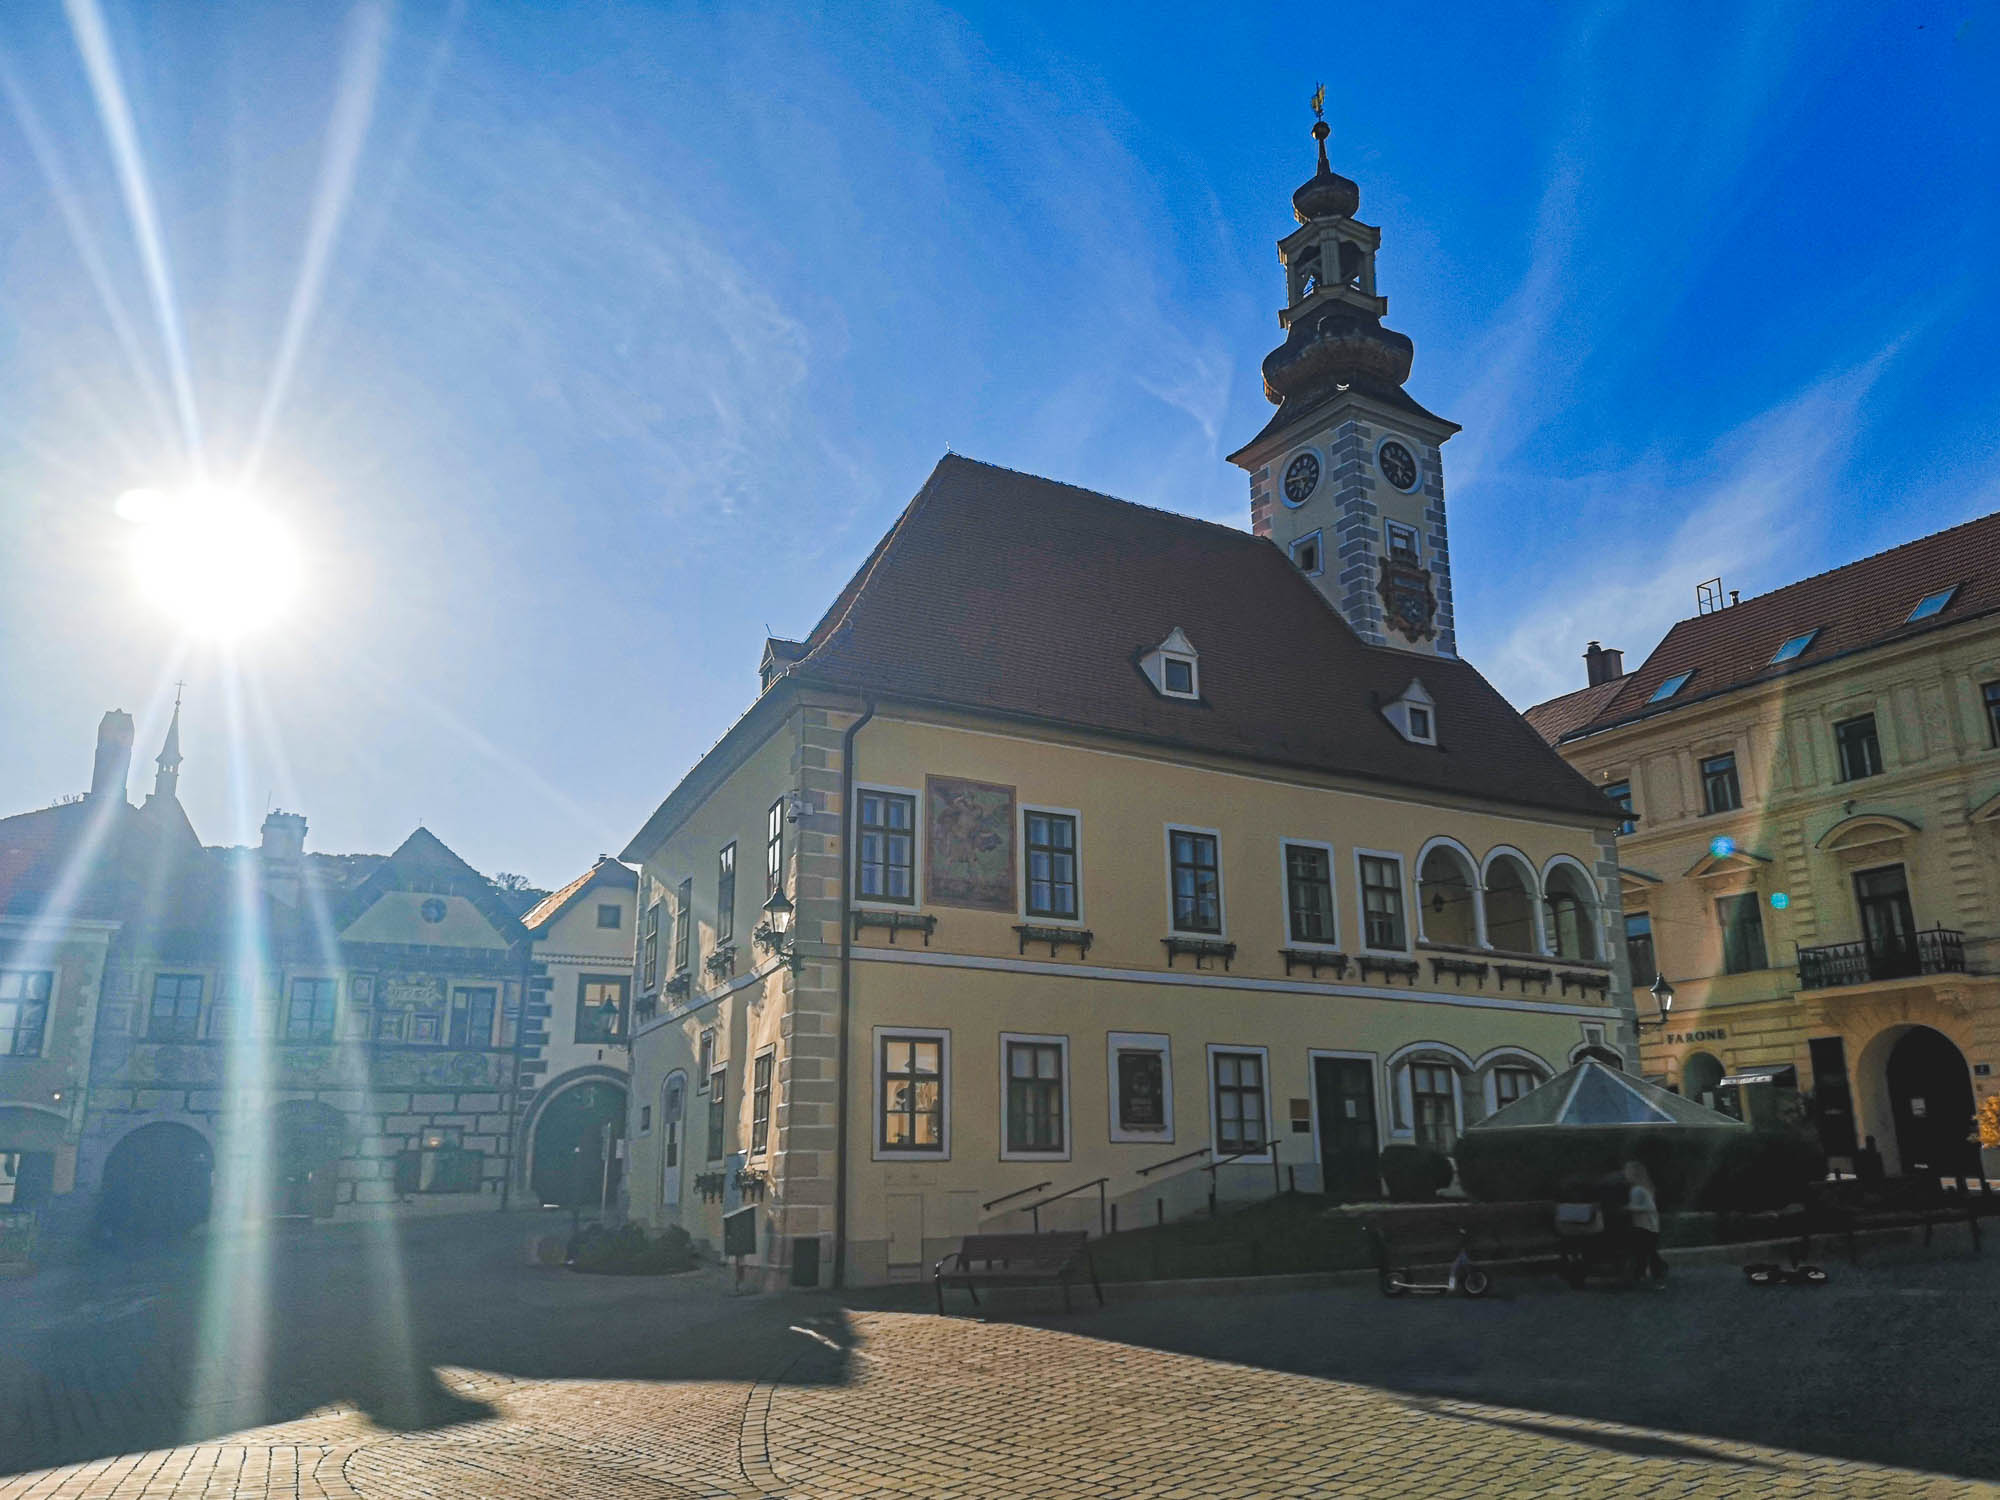 The town hall of Mödling, Austriaa